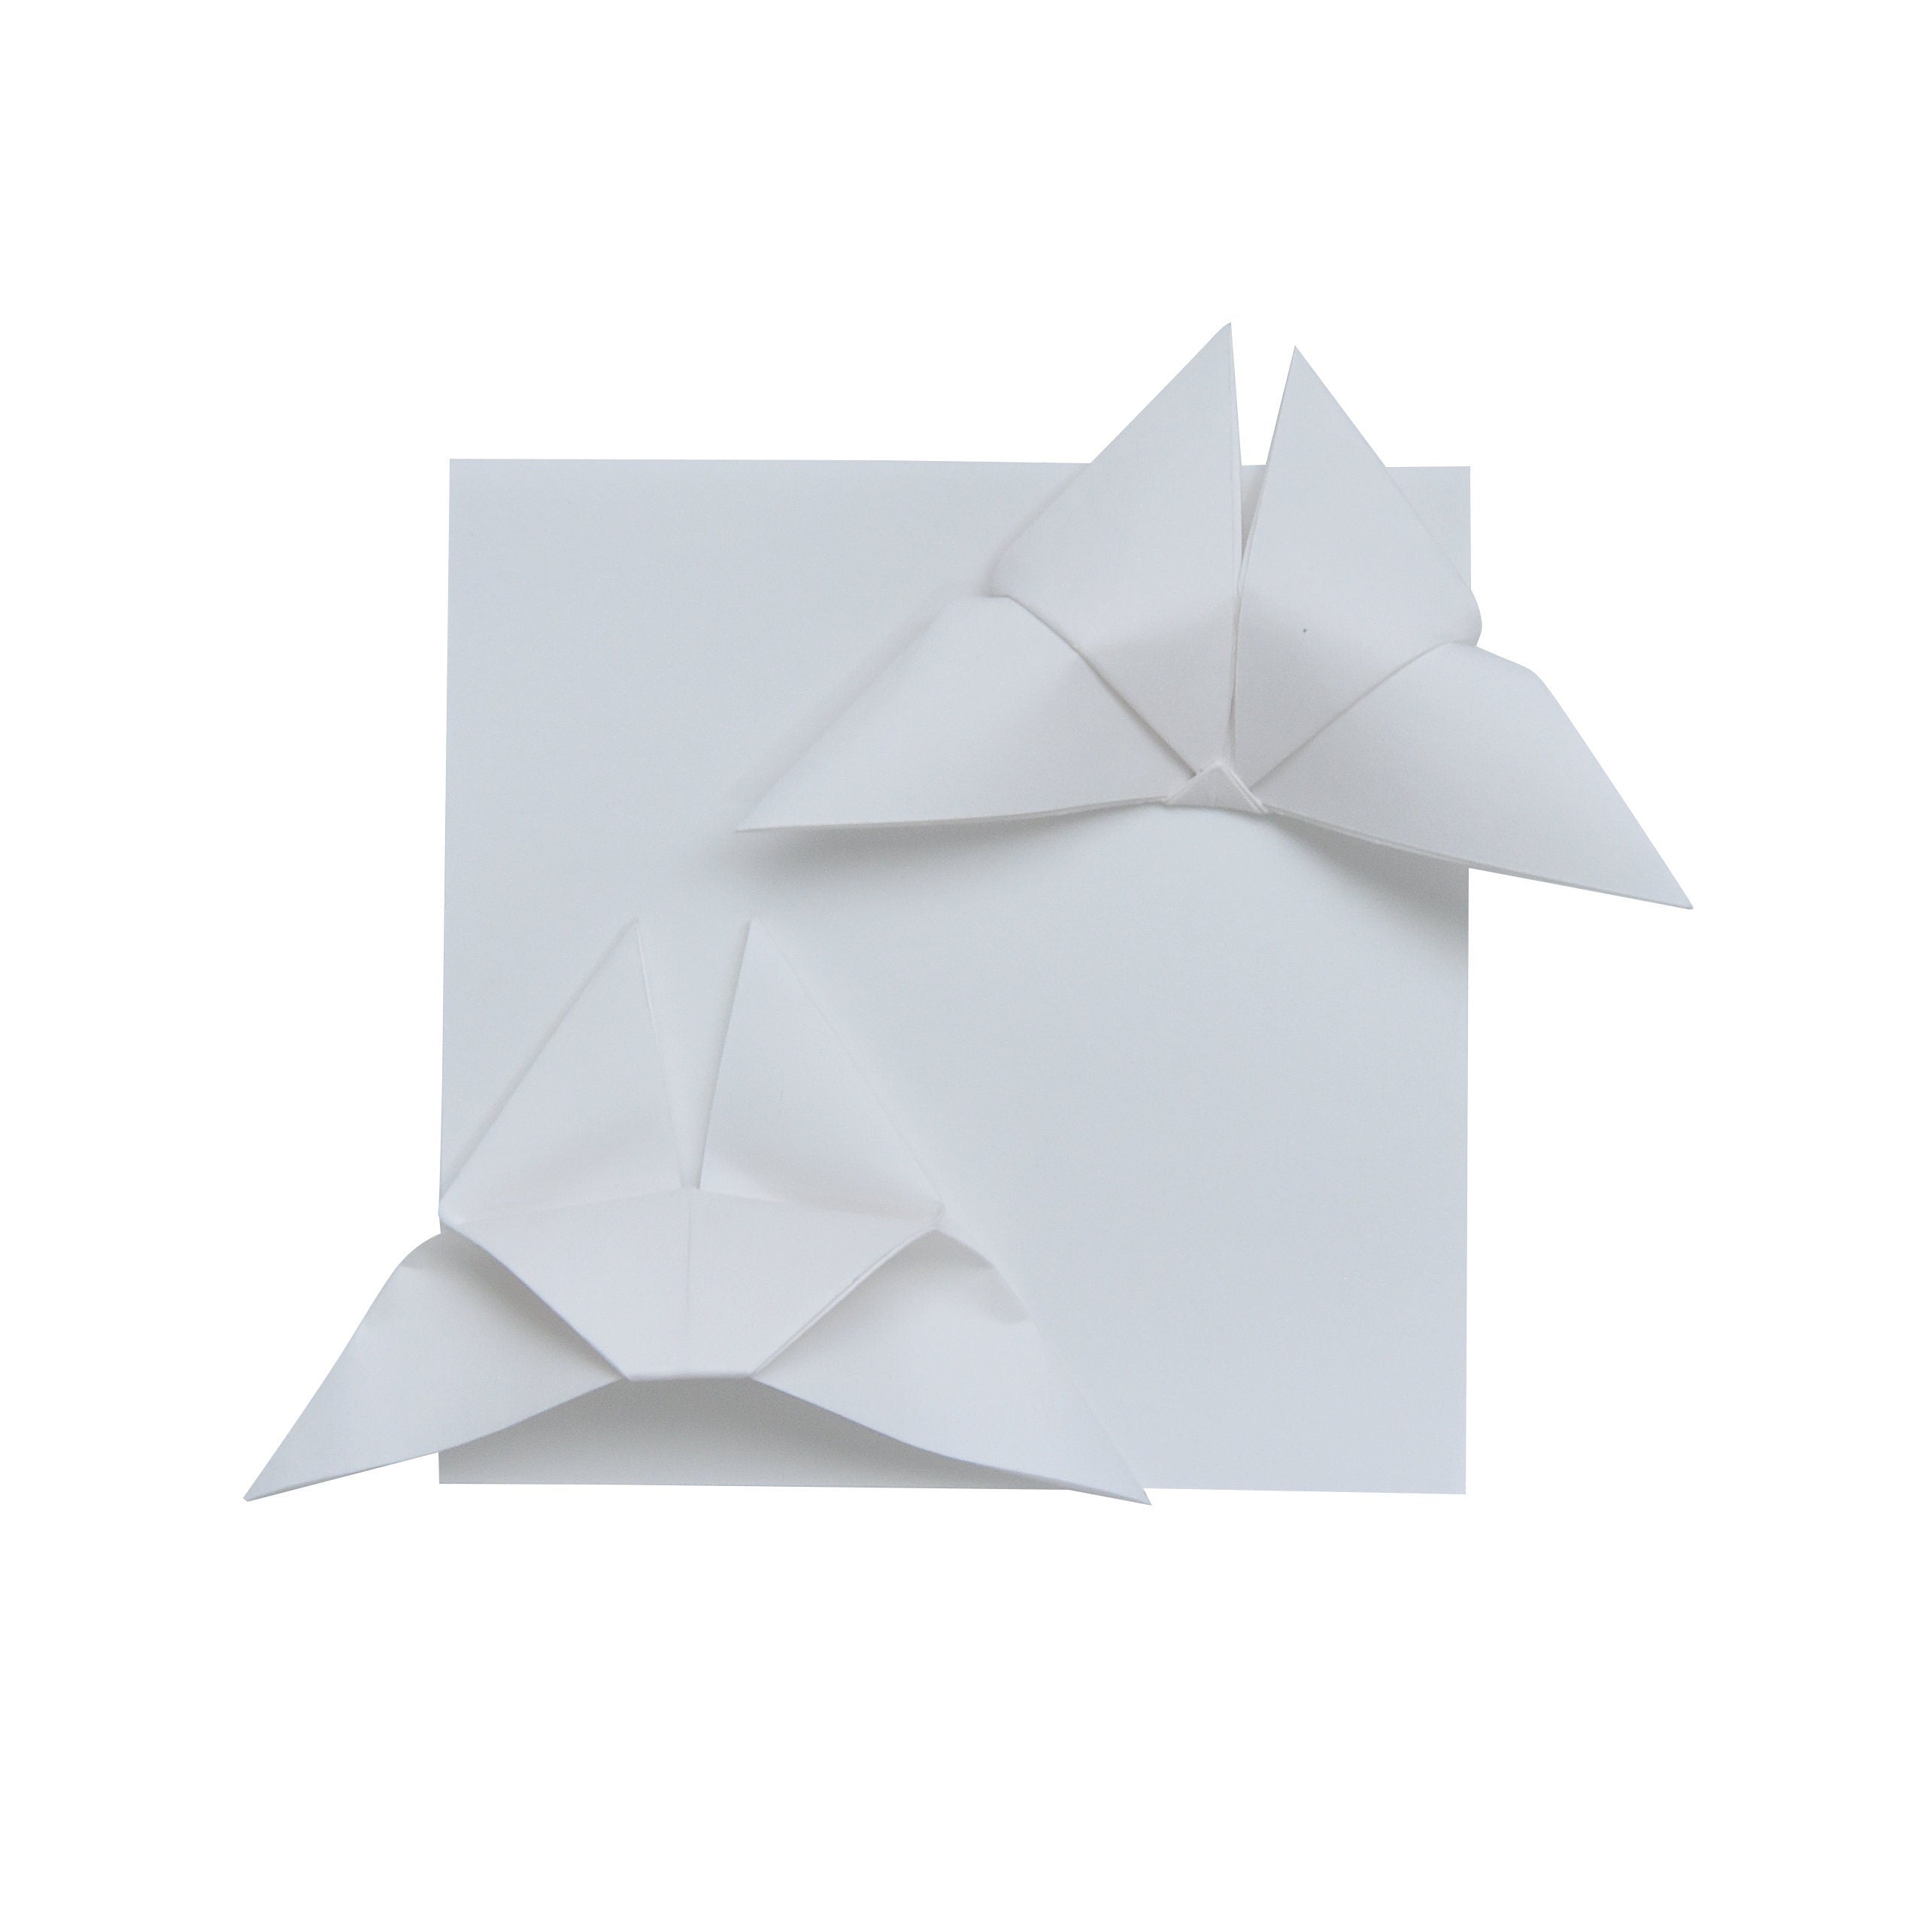 100 fogli di carta origami avorio - grandi 6x6 pollici - per carta pieghevole, gru origami, decorazioni origami